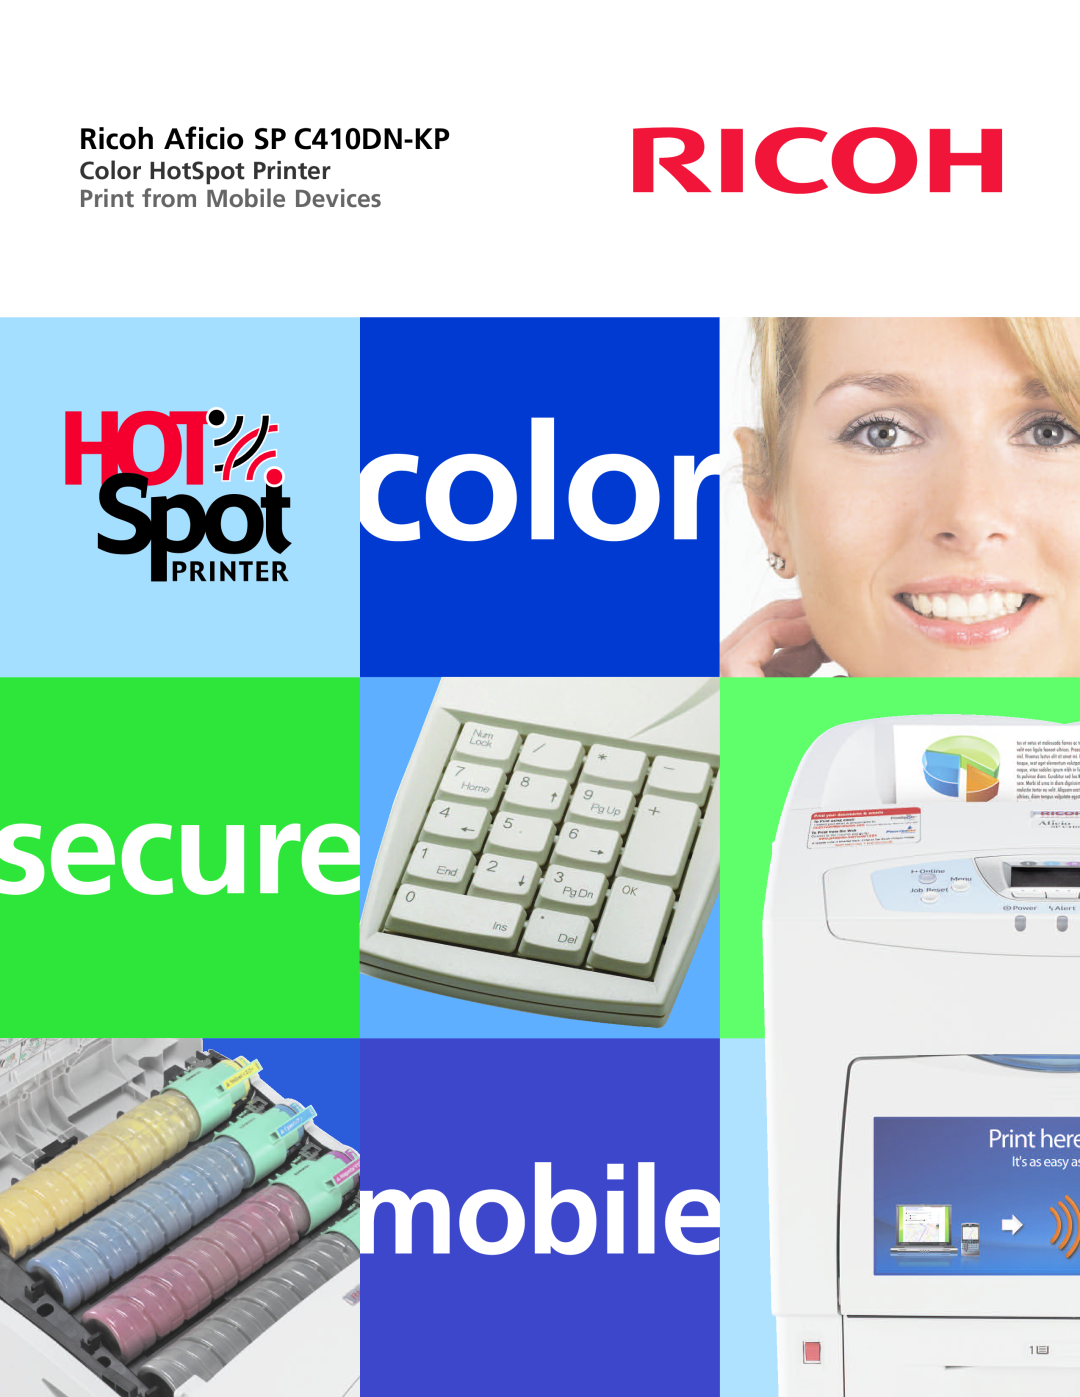 Ricoh manual color, secure, mobile, Ricoh Aficio SP C410DN-KP, Color HotSpot Printer, Print from Mobile Devices 